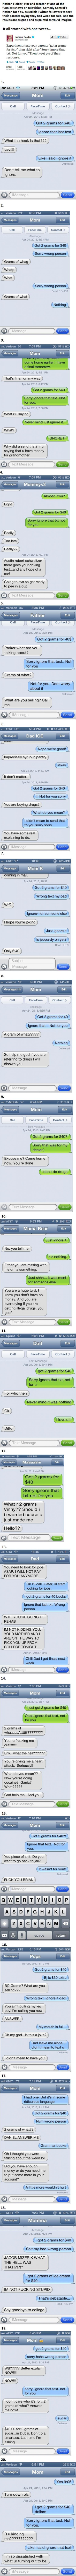 Kids Send Fake Texts To Parents... Their Responses Hilarious!  -   Misc